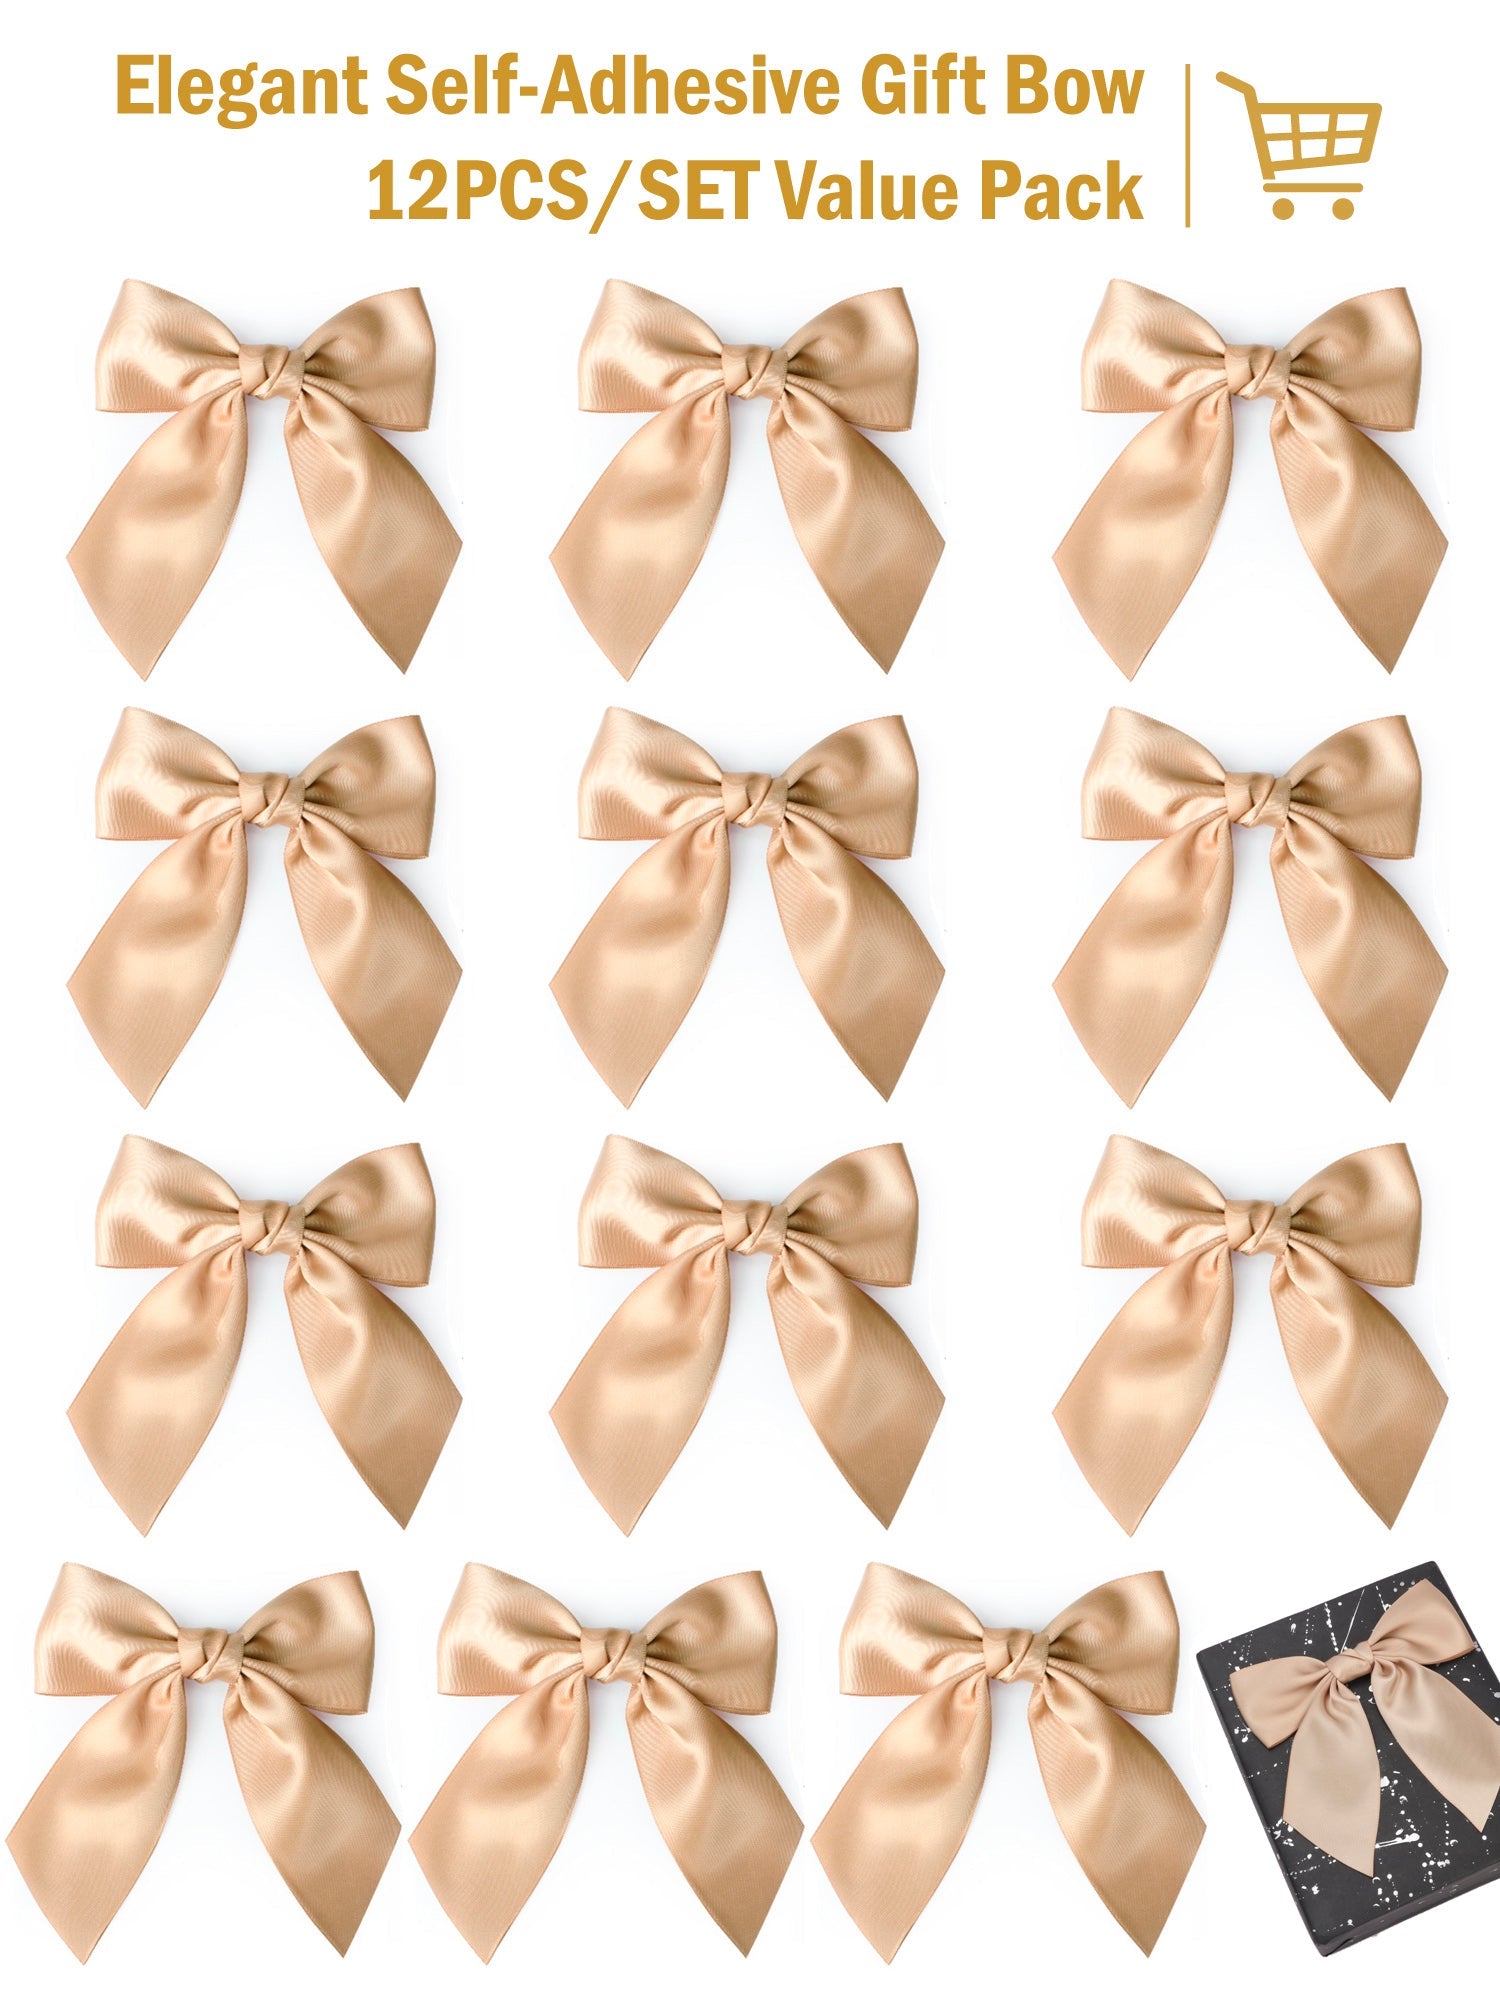 12pcs Gold Satin Ribbons Gift Wrapping Supplies Gift Bow Bundle